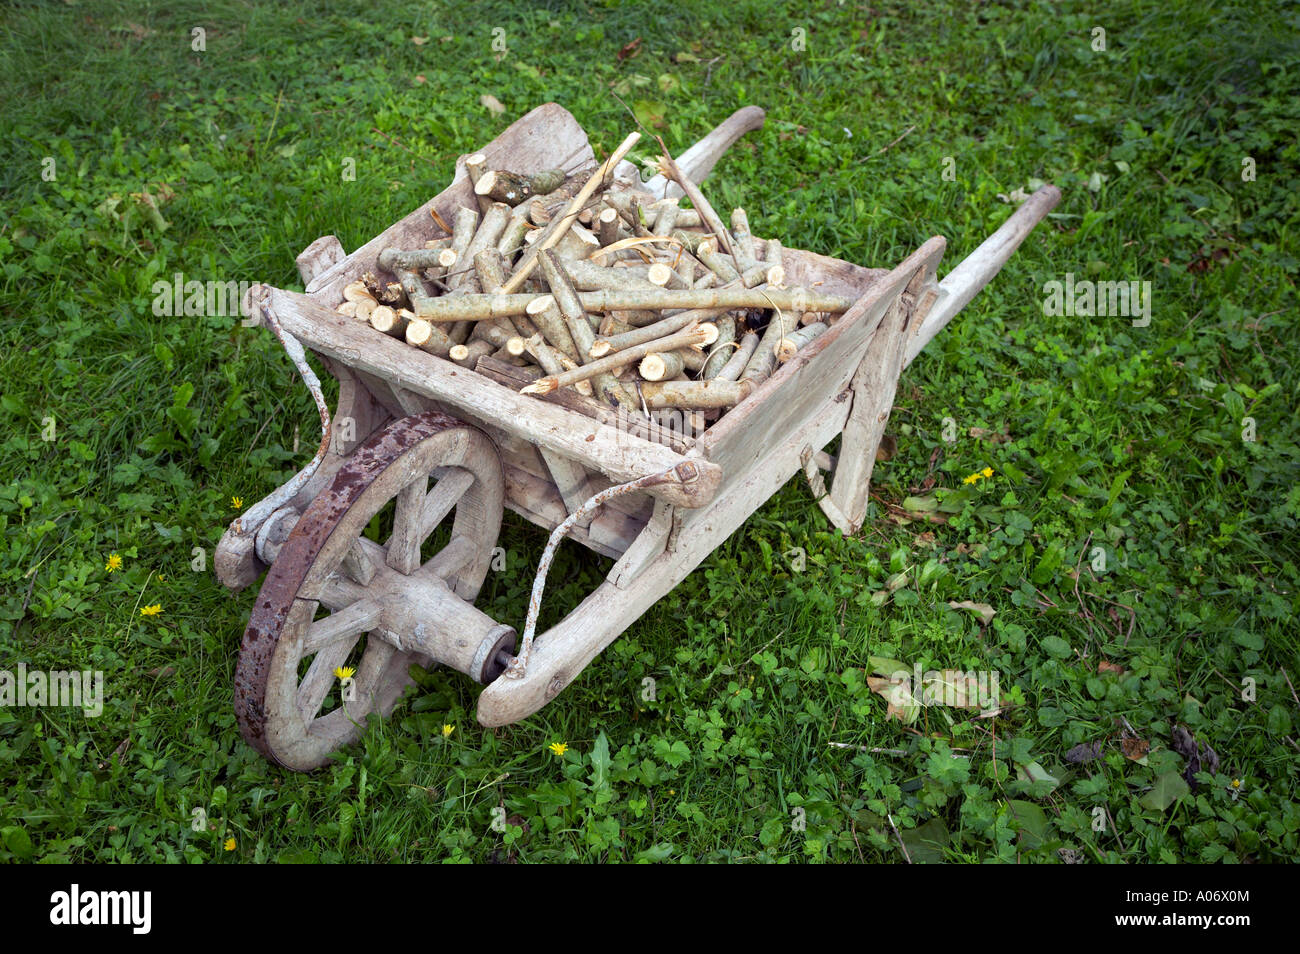 Firewood in an old wooden wheelbarrow Stock Photo